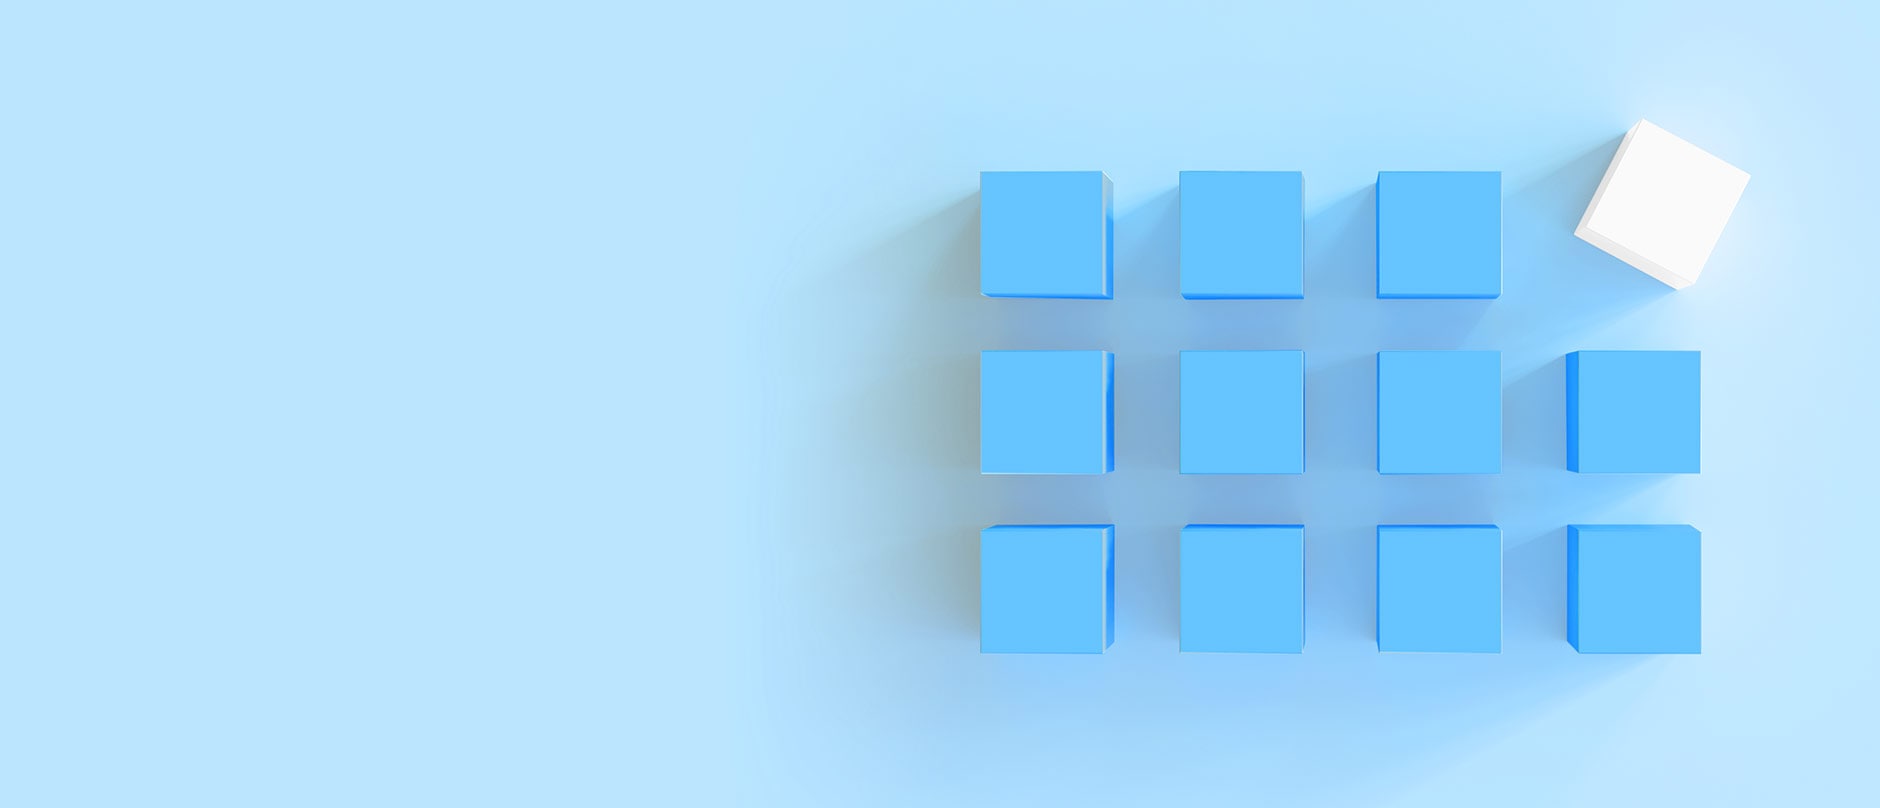 Blue and white blocks